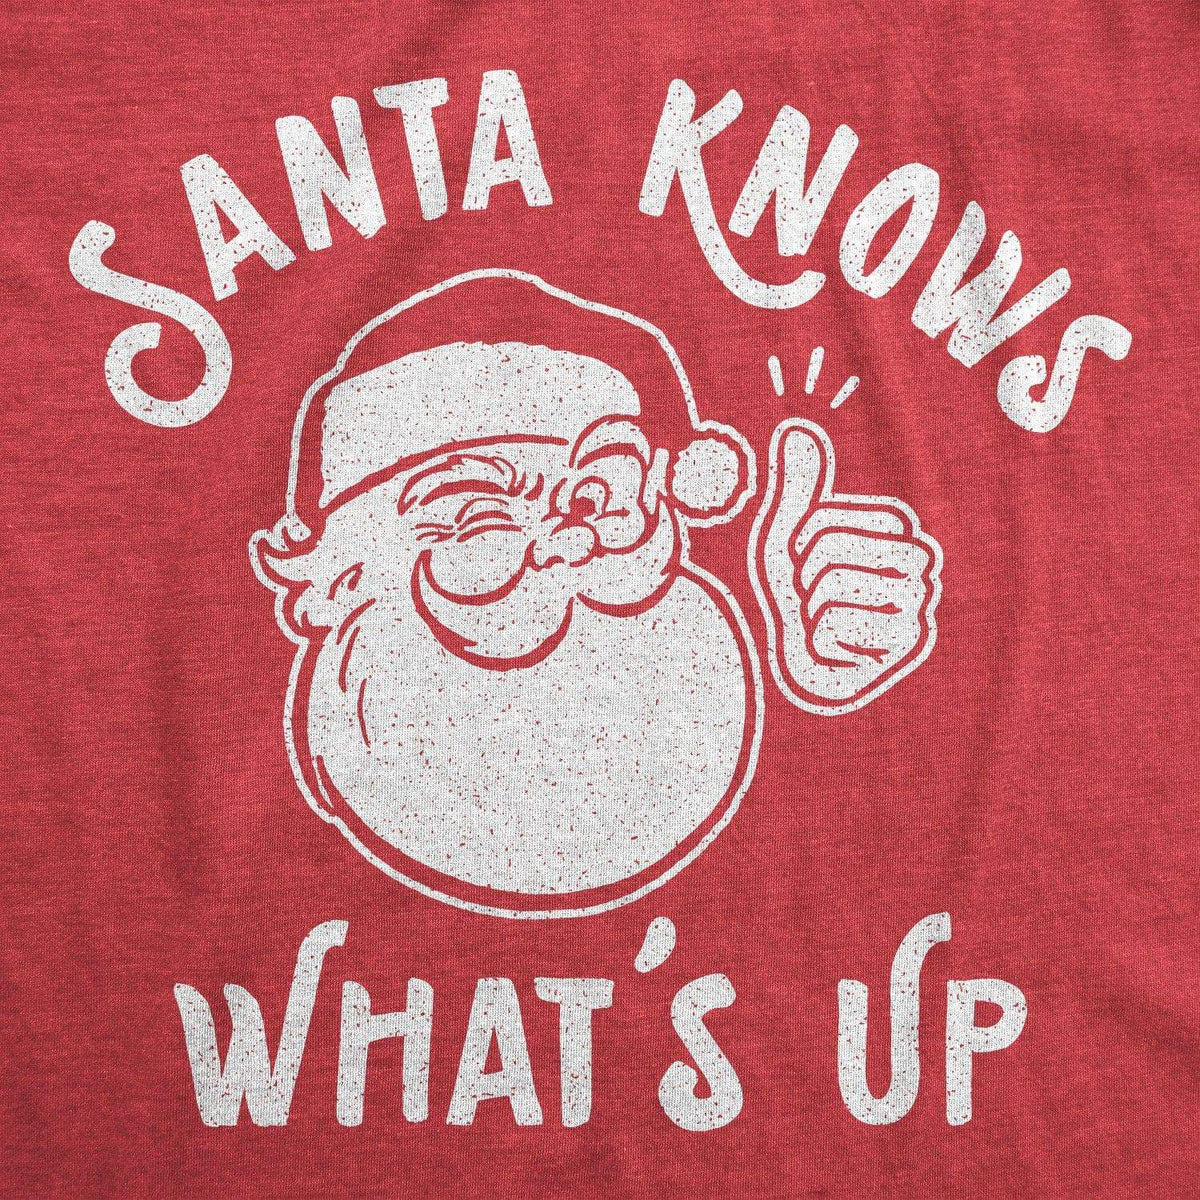 Santa Knows What&#39;s Up Men&#39;s Tshirt - Crazy Dog T-Shirts